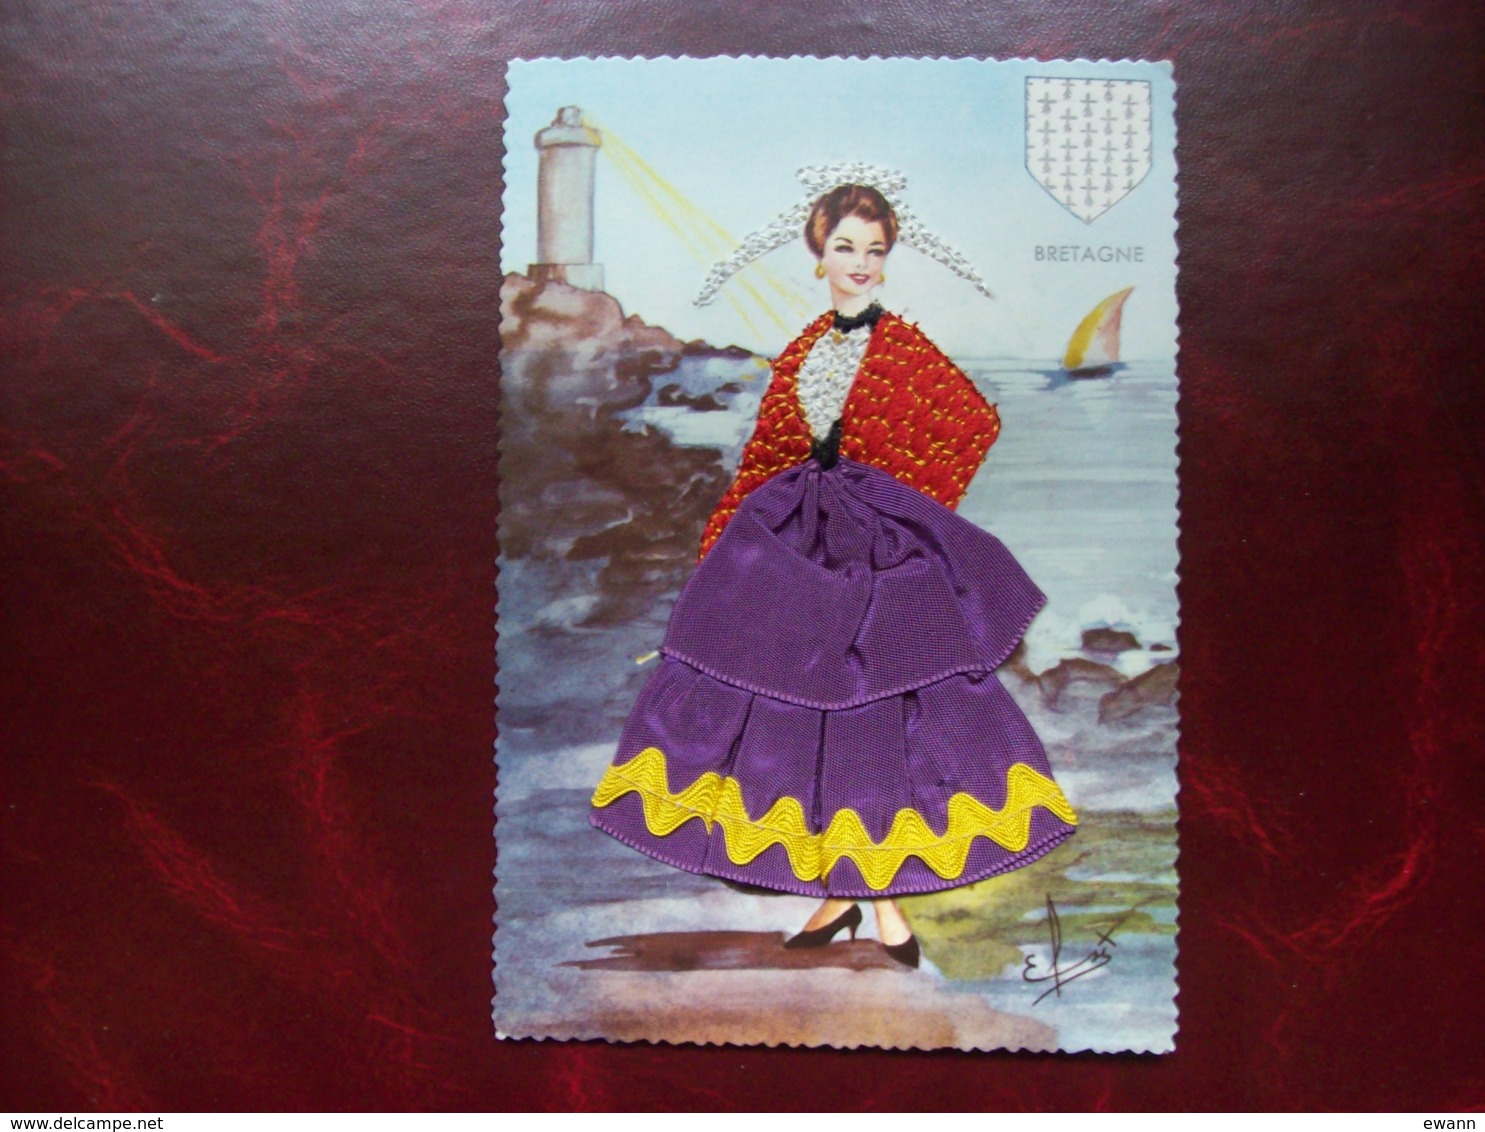 Carte Postale Brodée: Bretagne - Embroidered